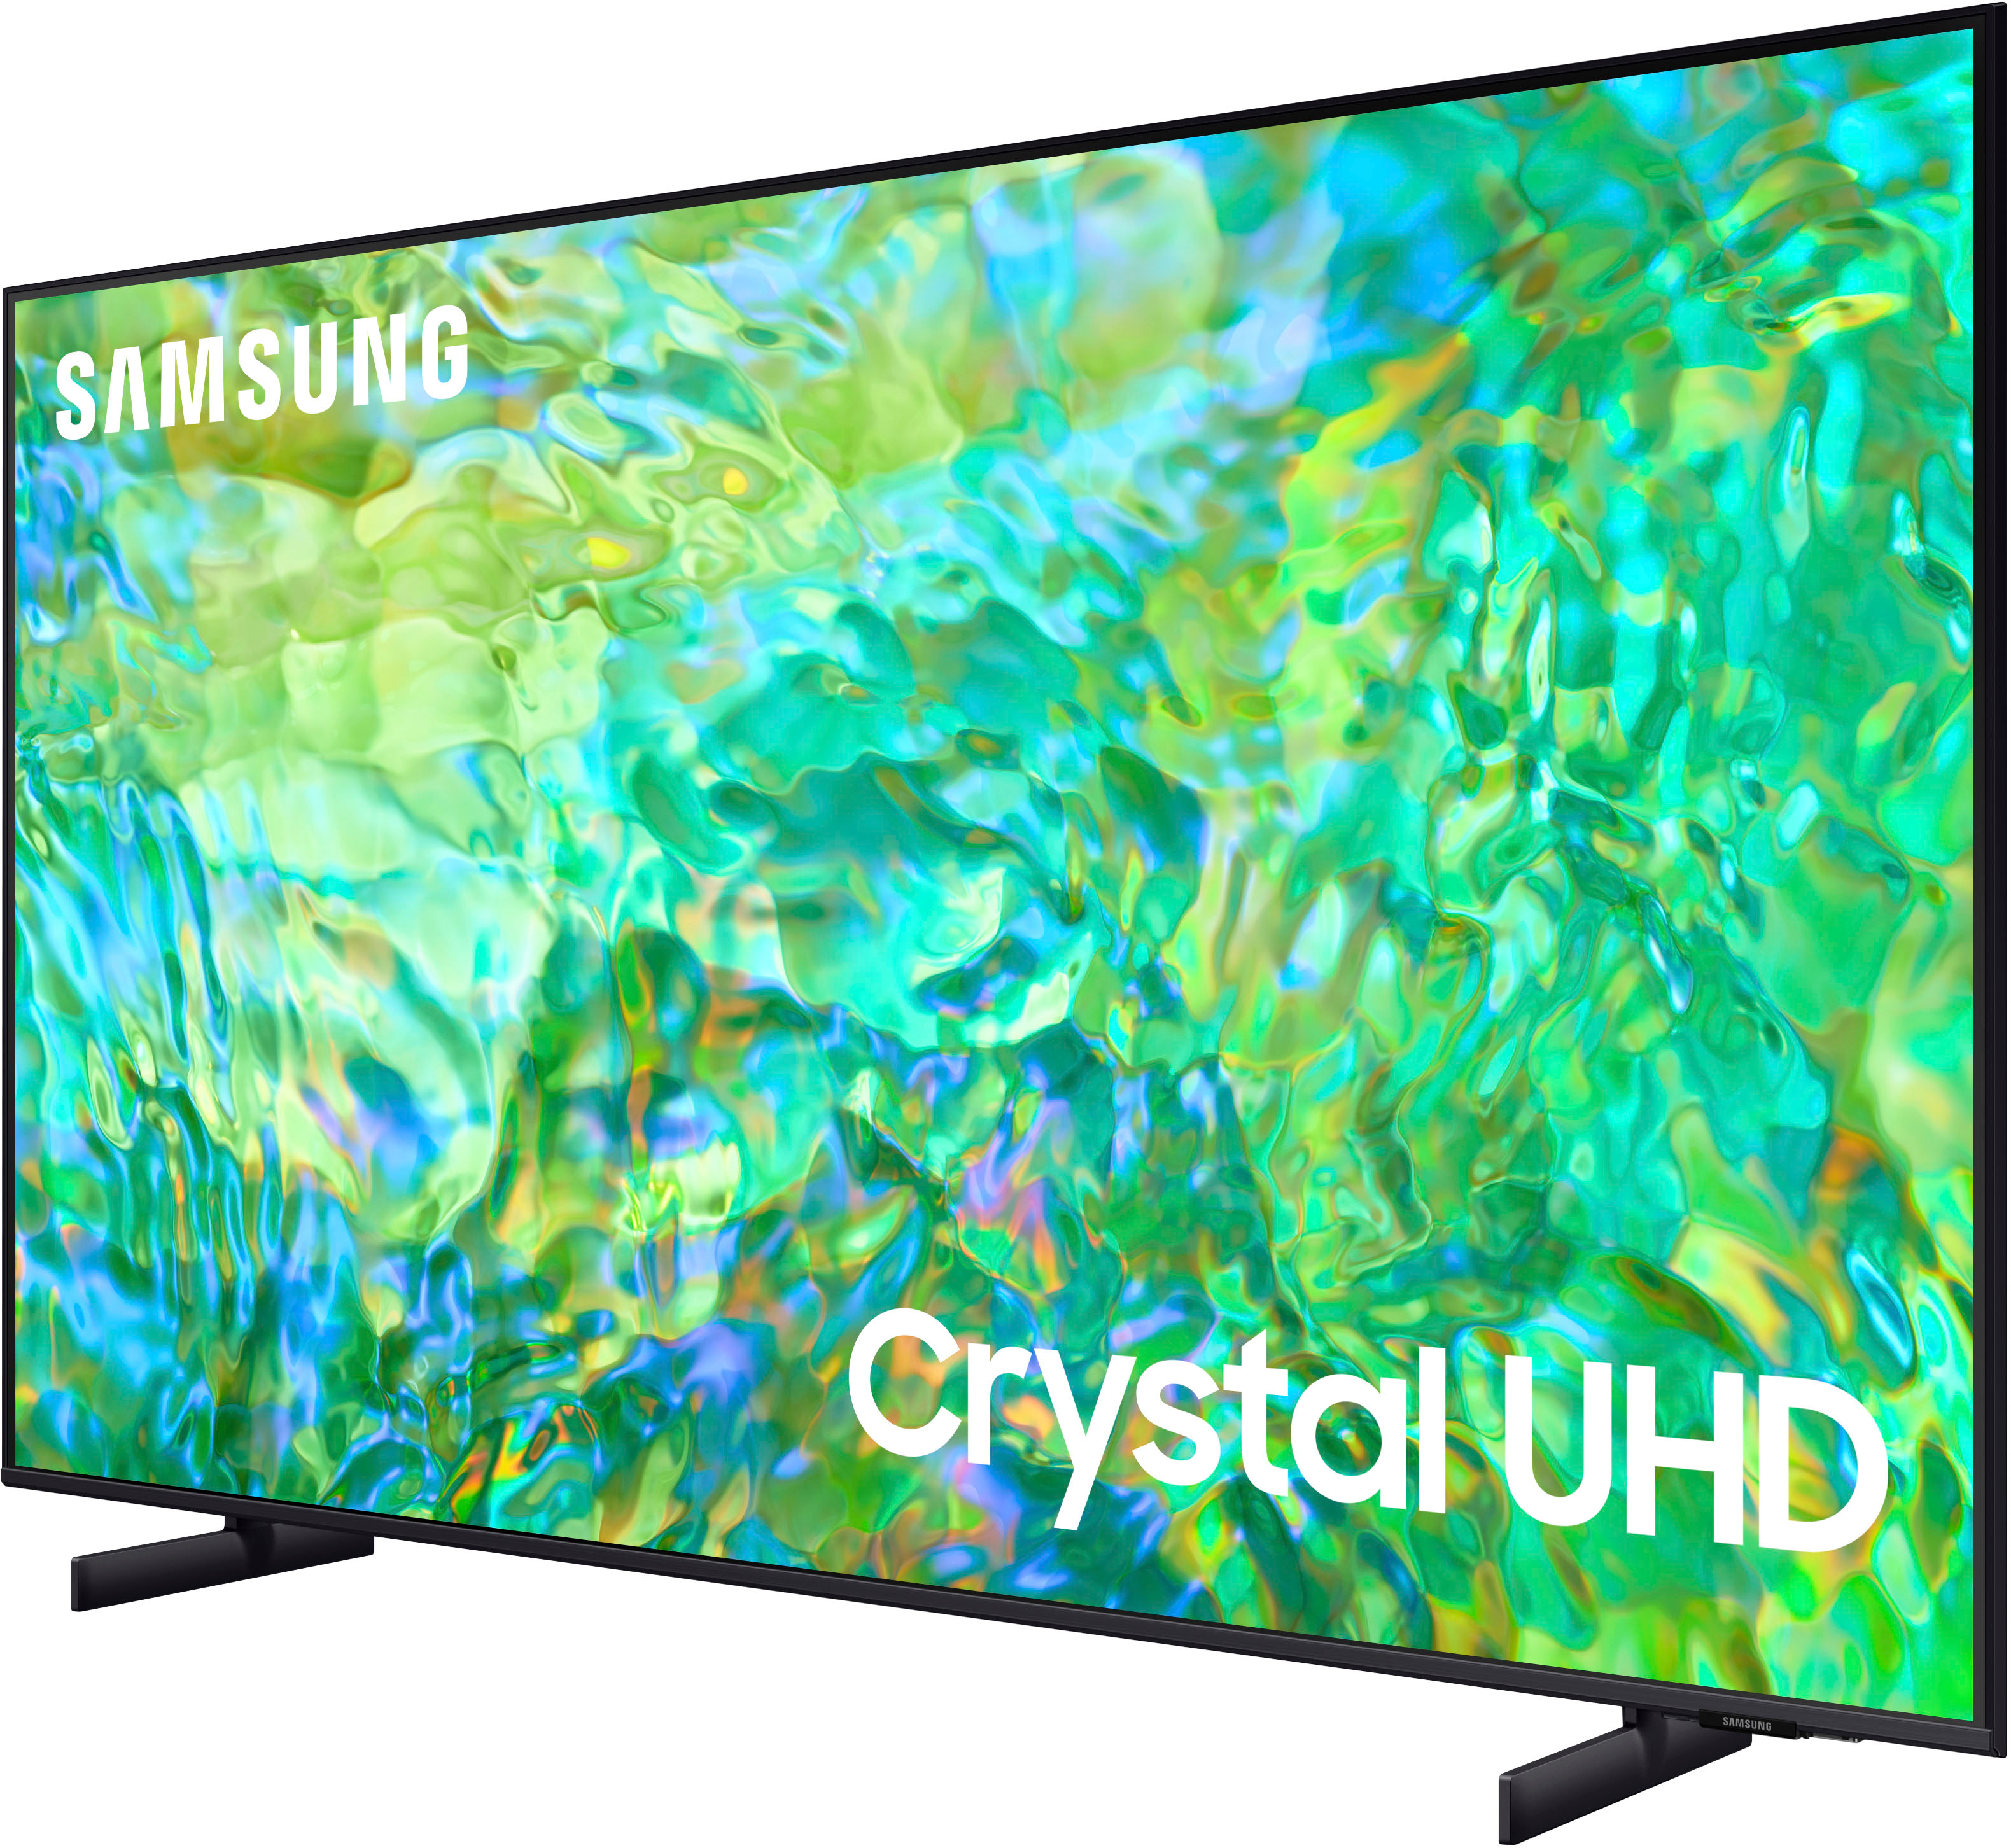 reservedele Svane skade Samsung 50" Class CU8000 Crystal UHD 4K Smart Tizen TV UN50CU8000FXZA -  Best Buy